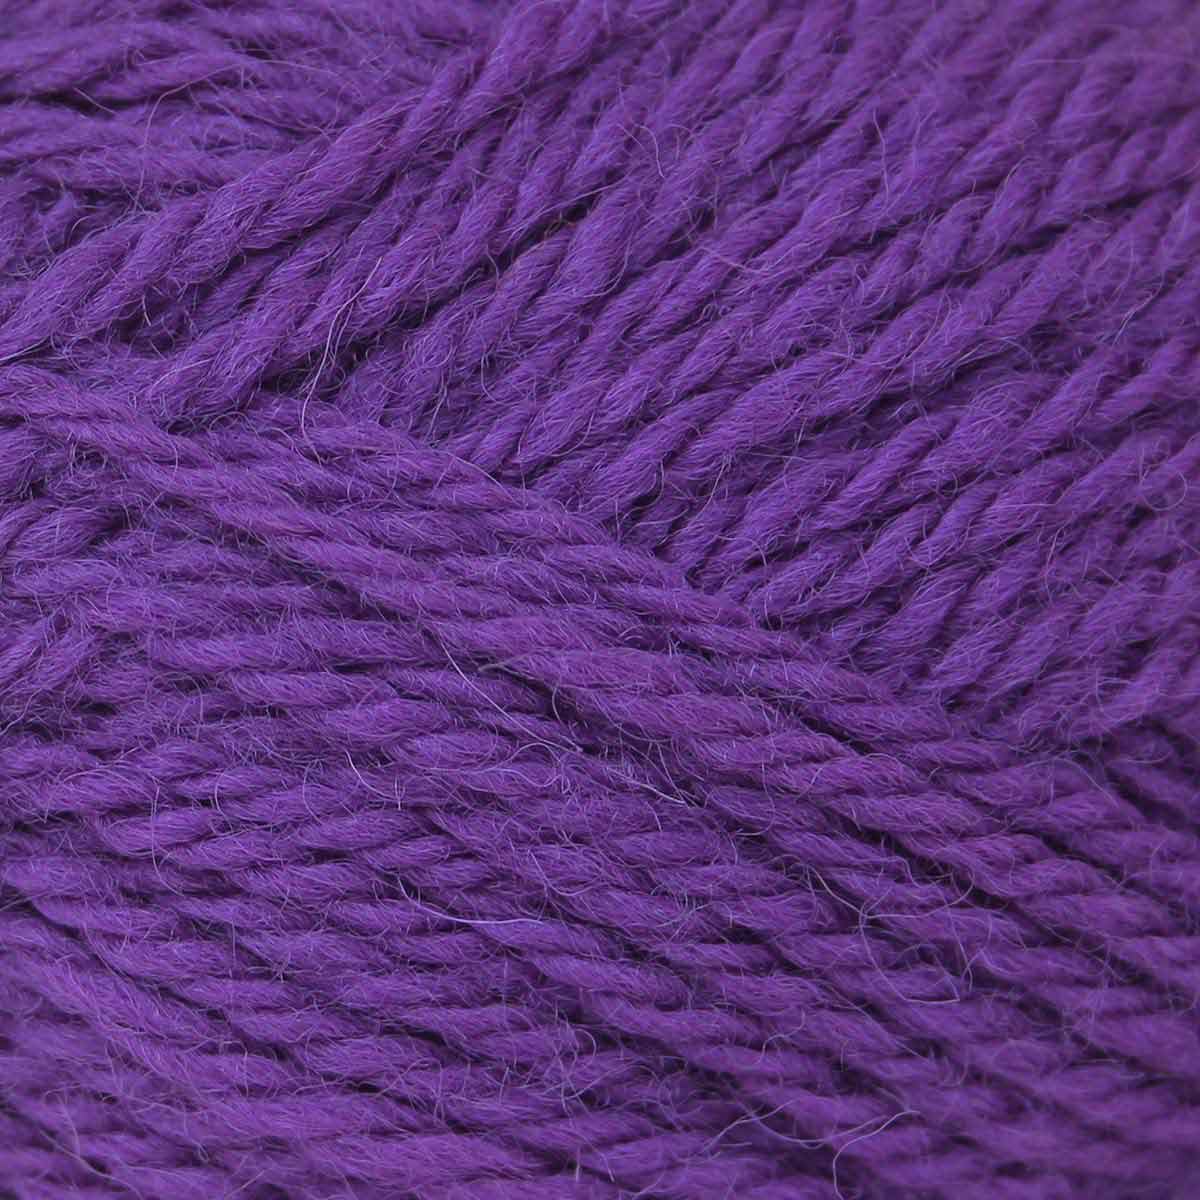 Aran - 100% British Wool